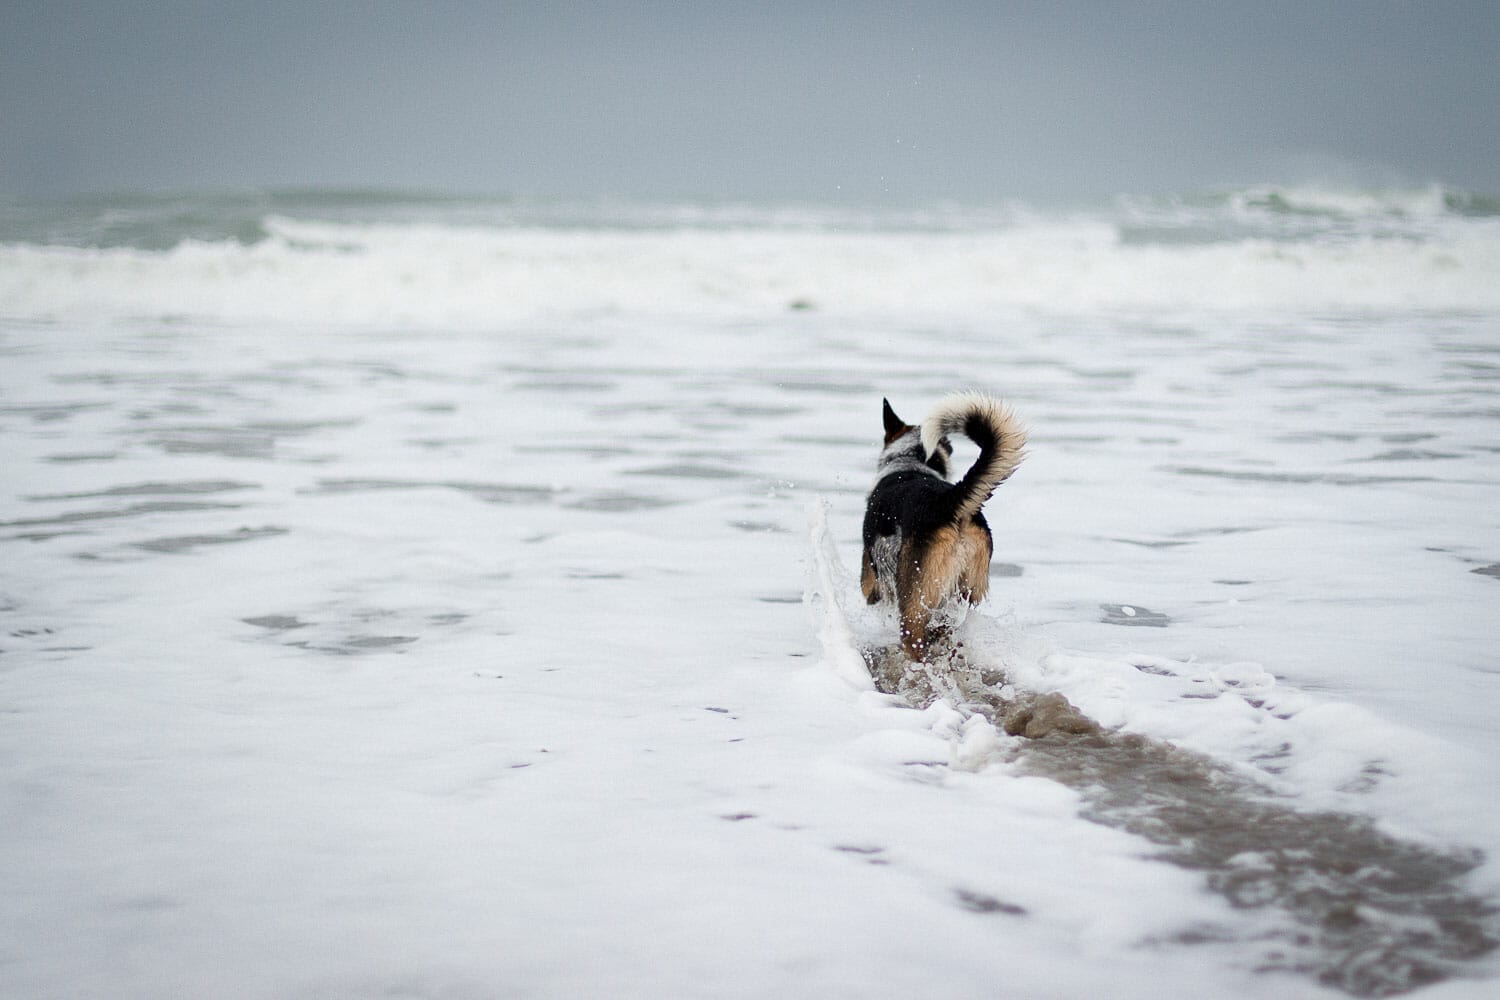 Dog running on the beach towards the ocean waves.